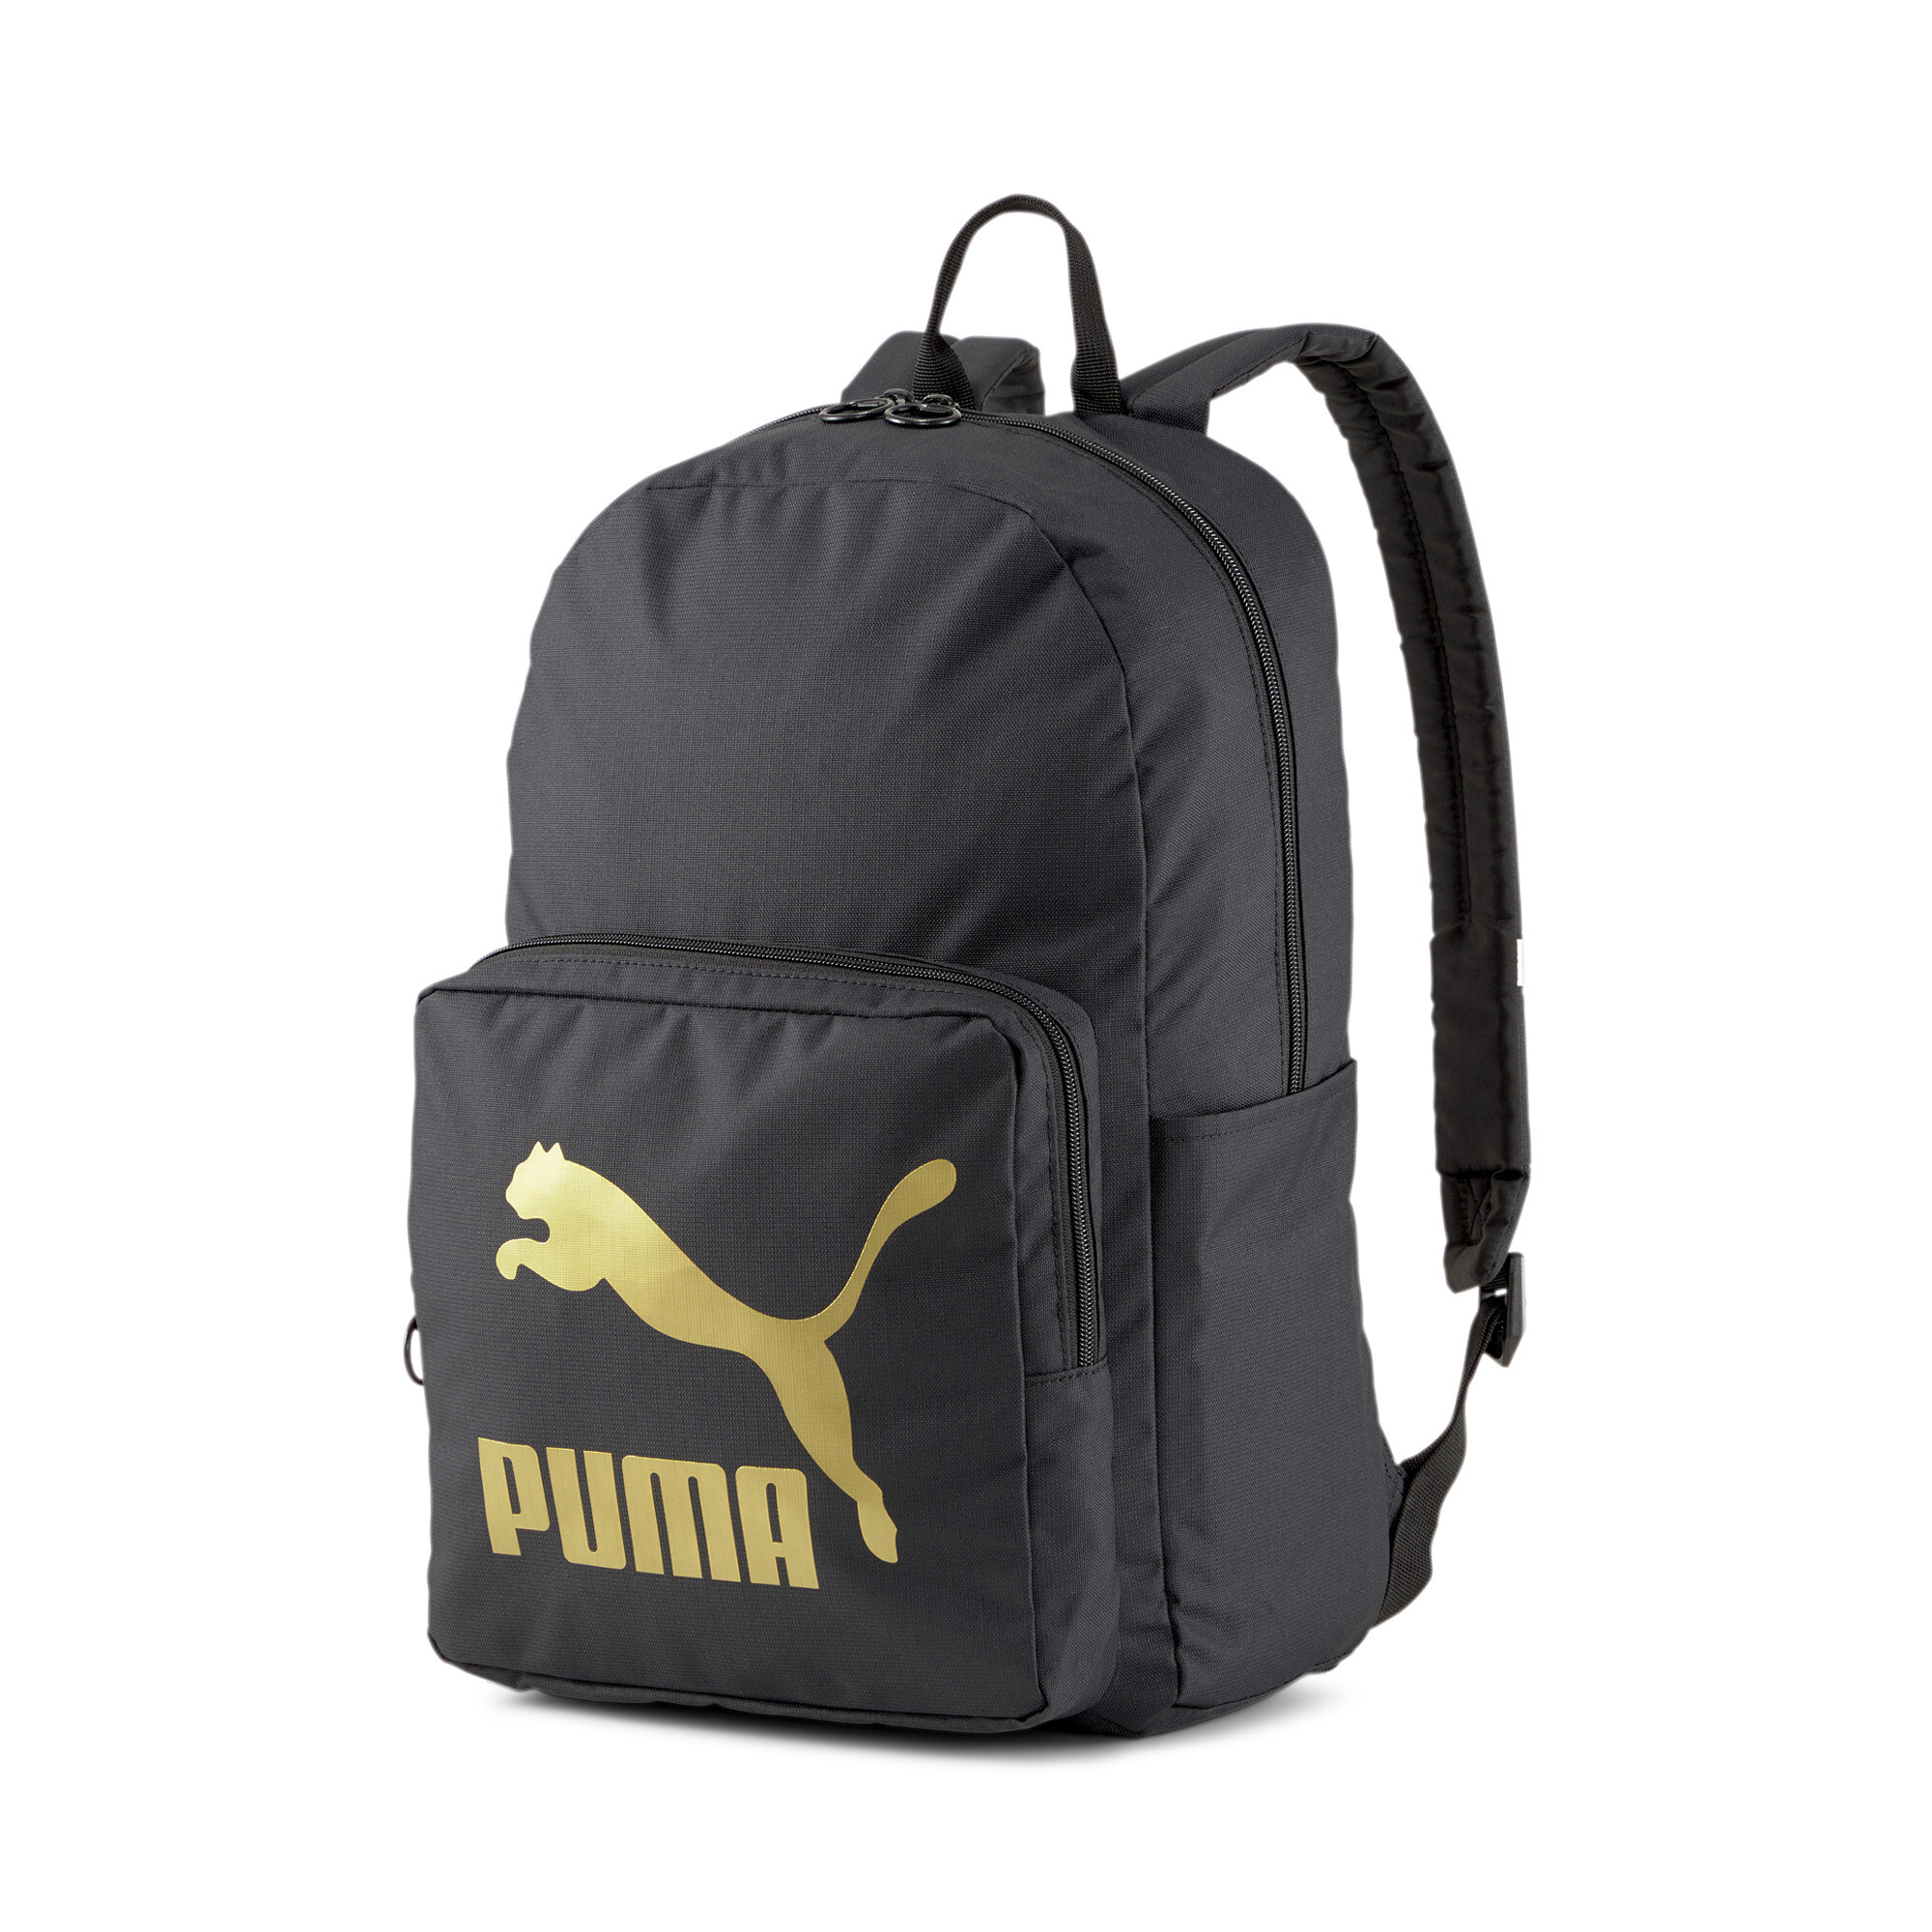 puma sports bags australia